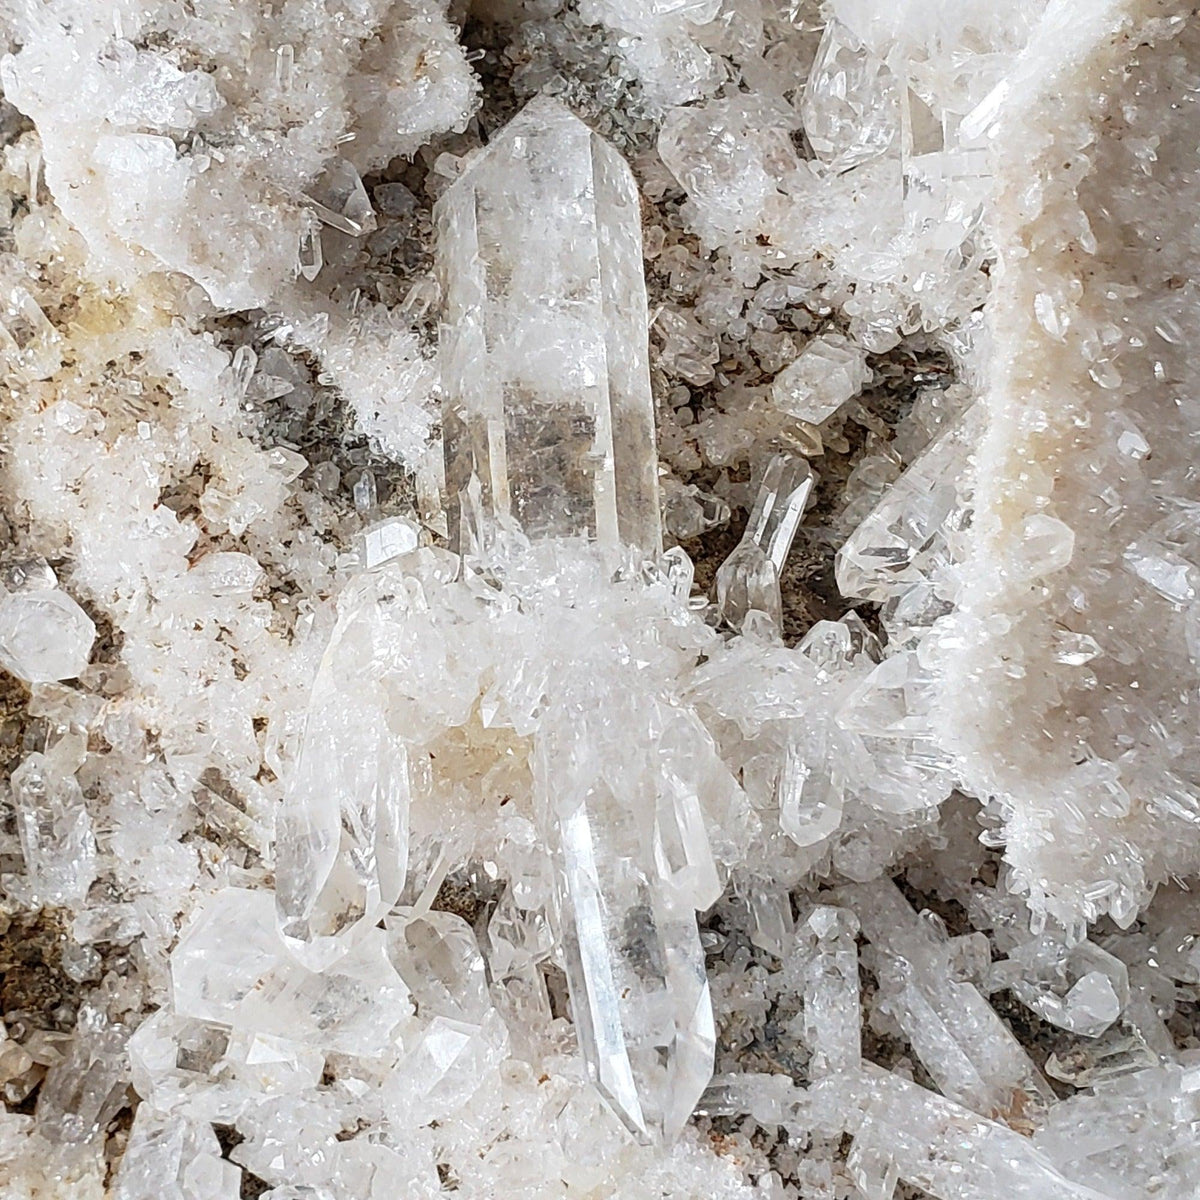 Himalayan Quartz Cluster | Multiple Clear Terminated Quartz Points | 2.4 KG | AAA Mineral | Canagem.com